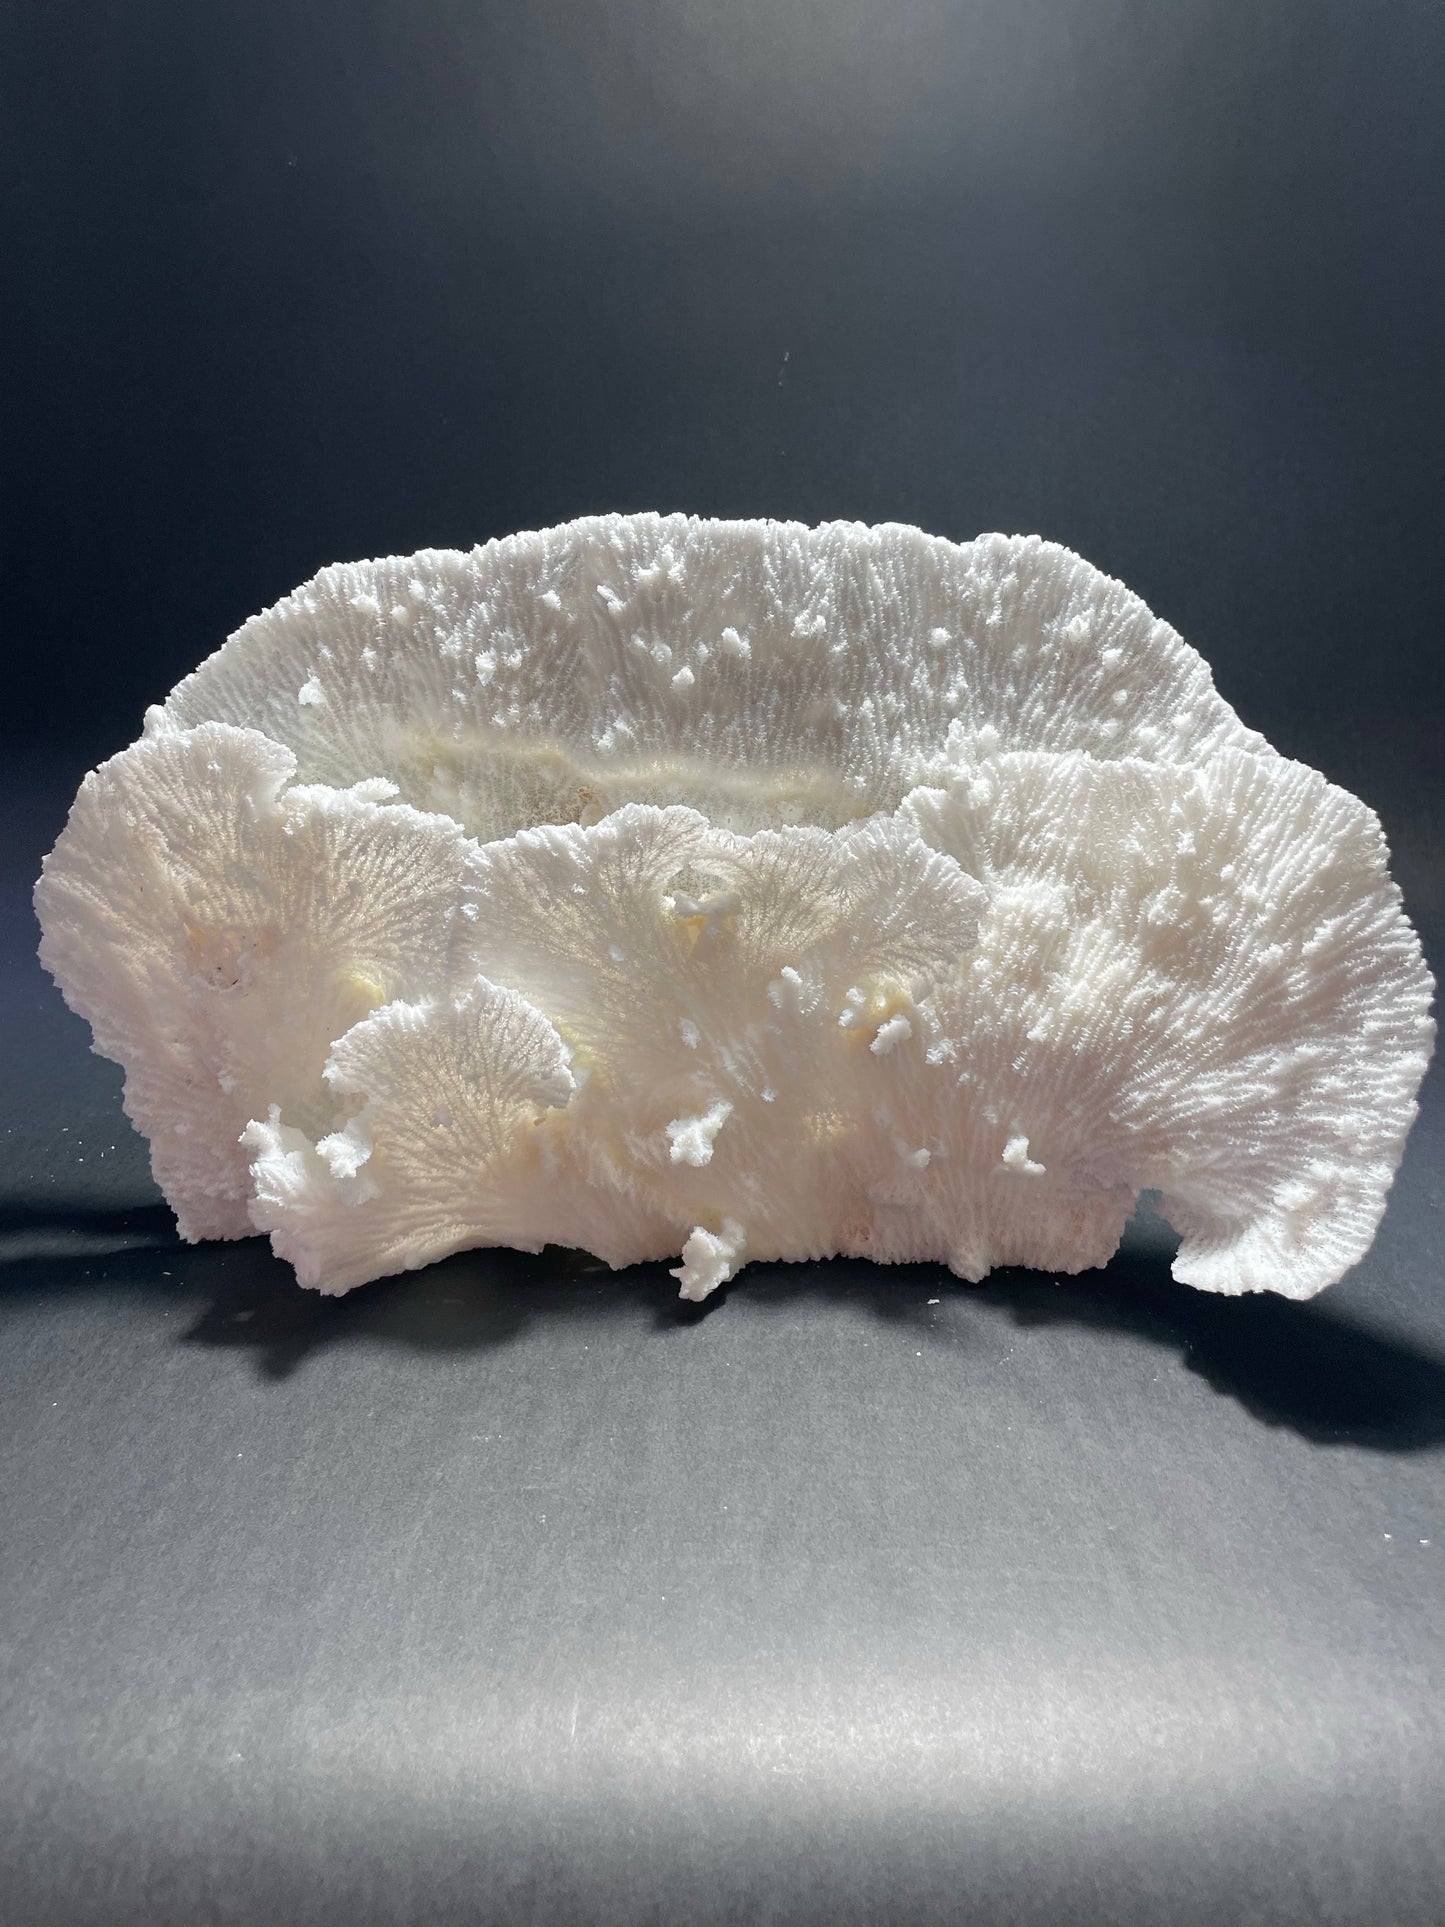 Merulina Coral (13"x7"x4”)